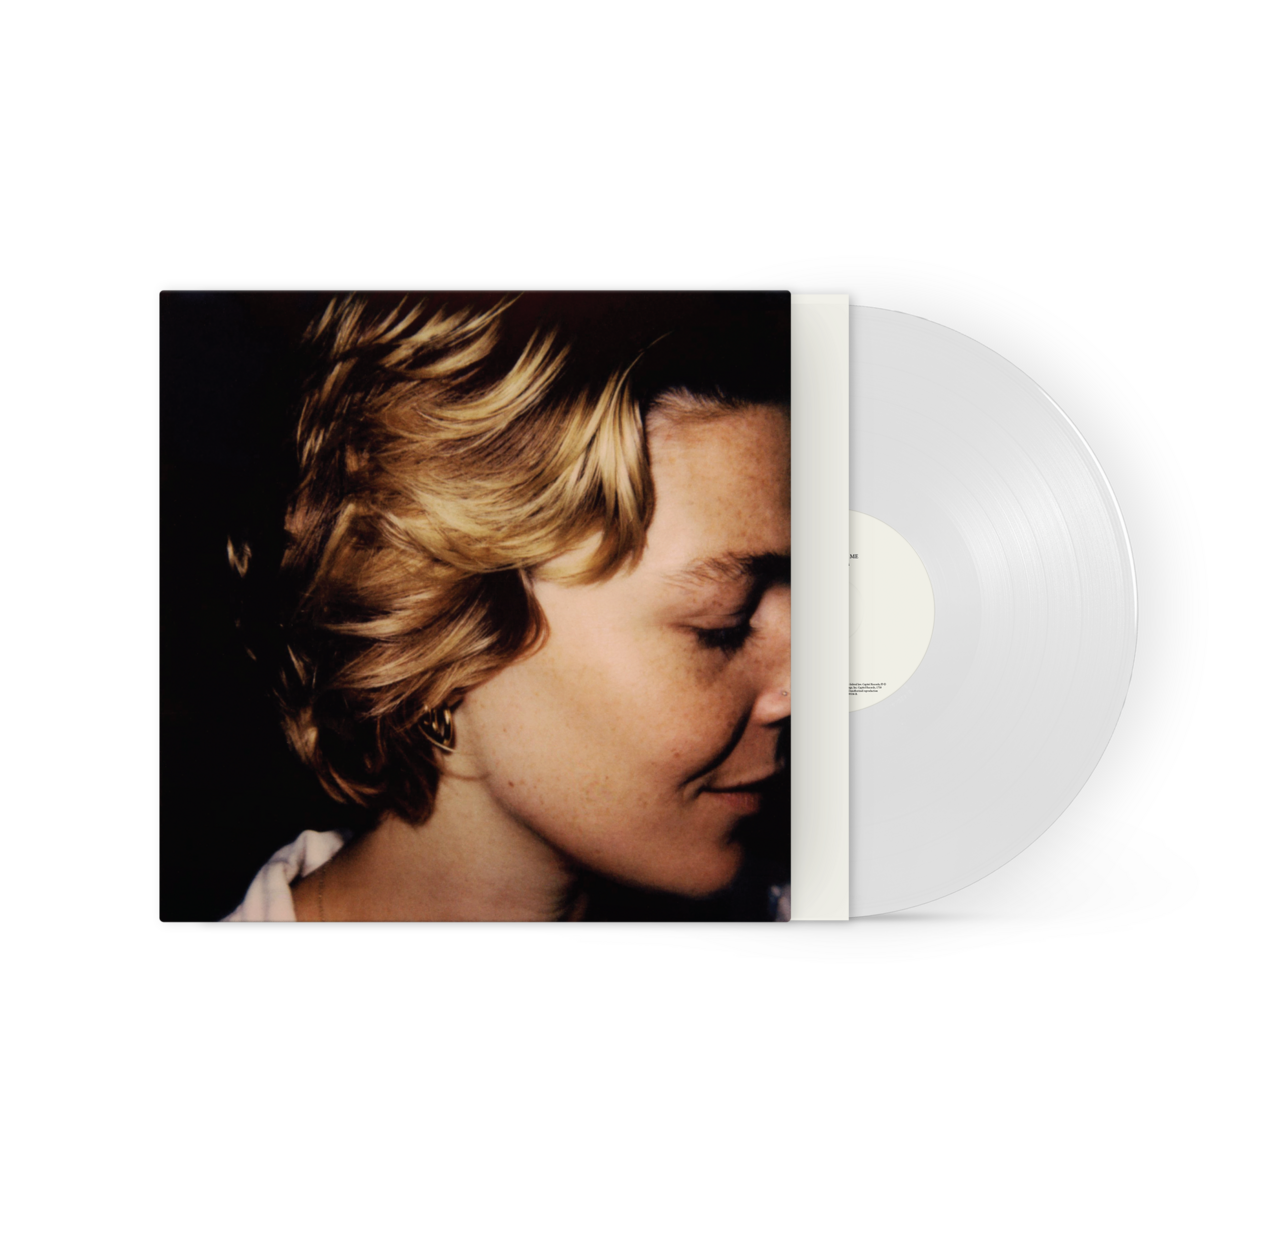 Don't Forget Me: Limited 'Milk' White Vinyl LP, CD + Signed Art Card